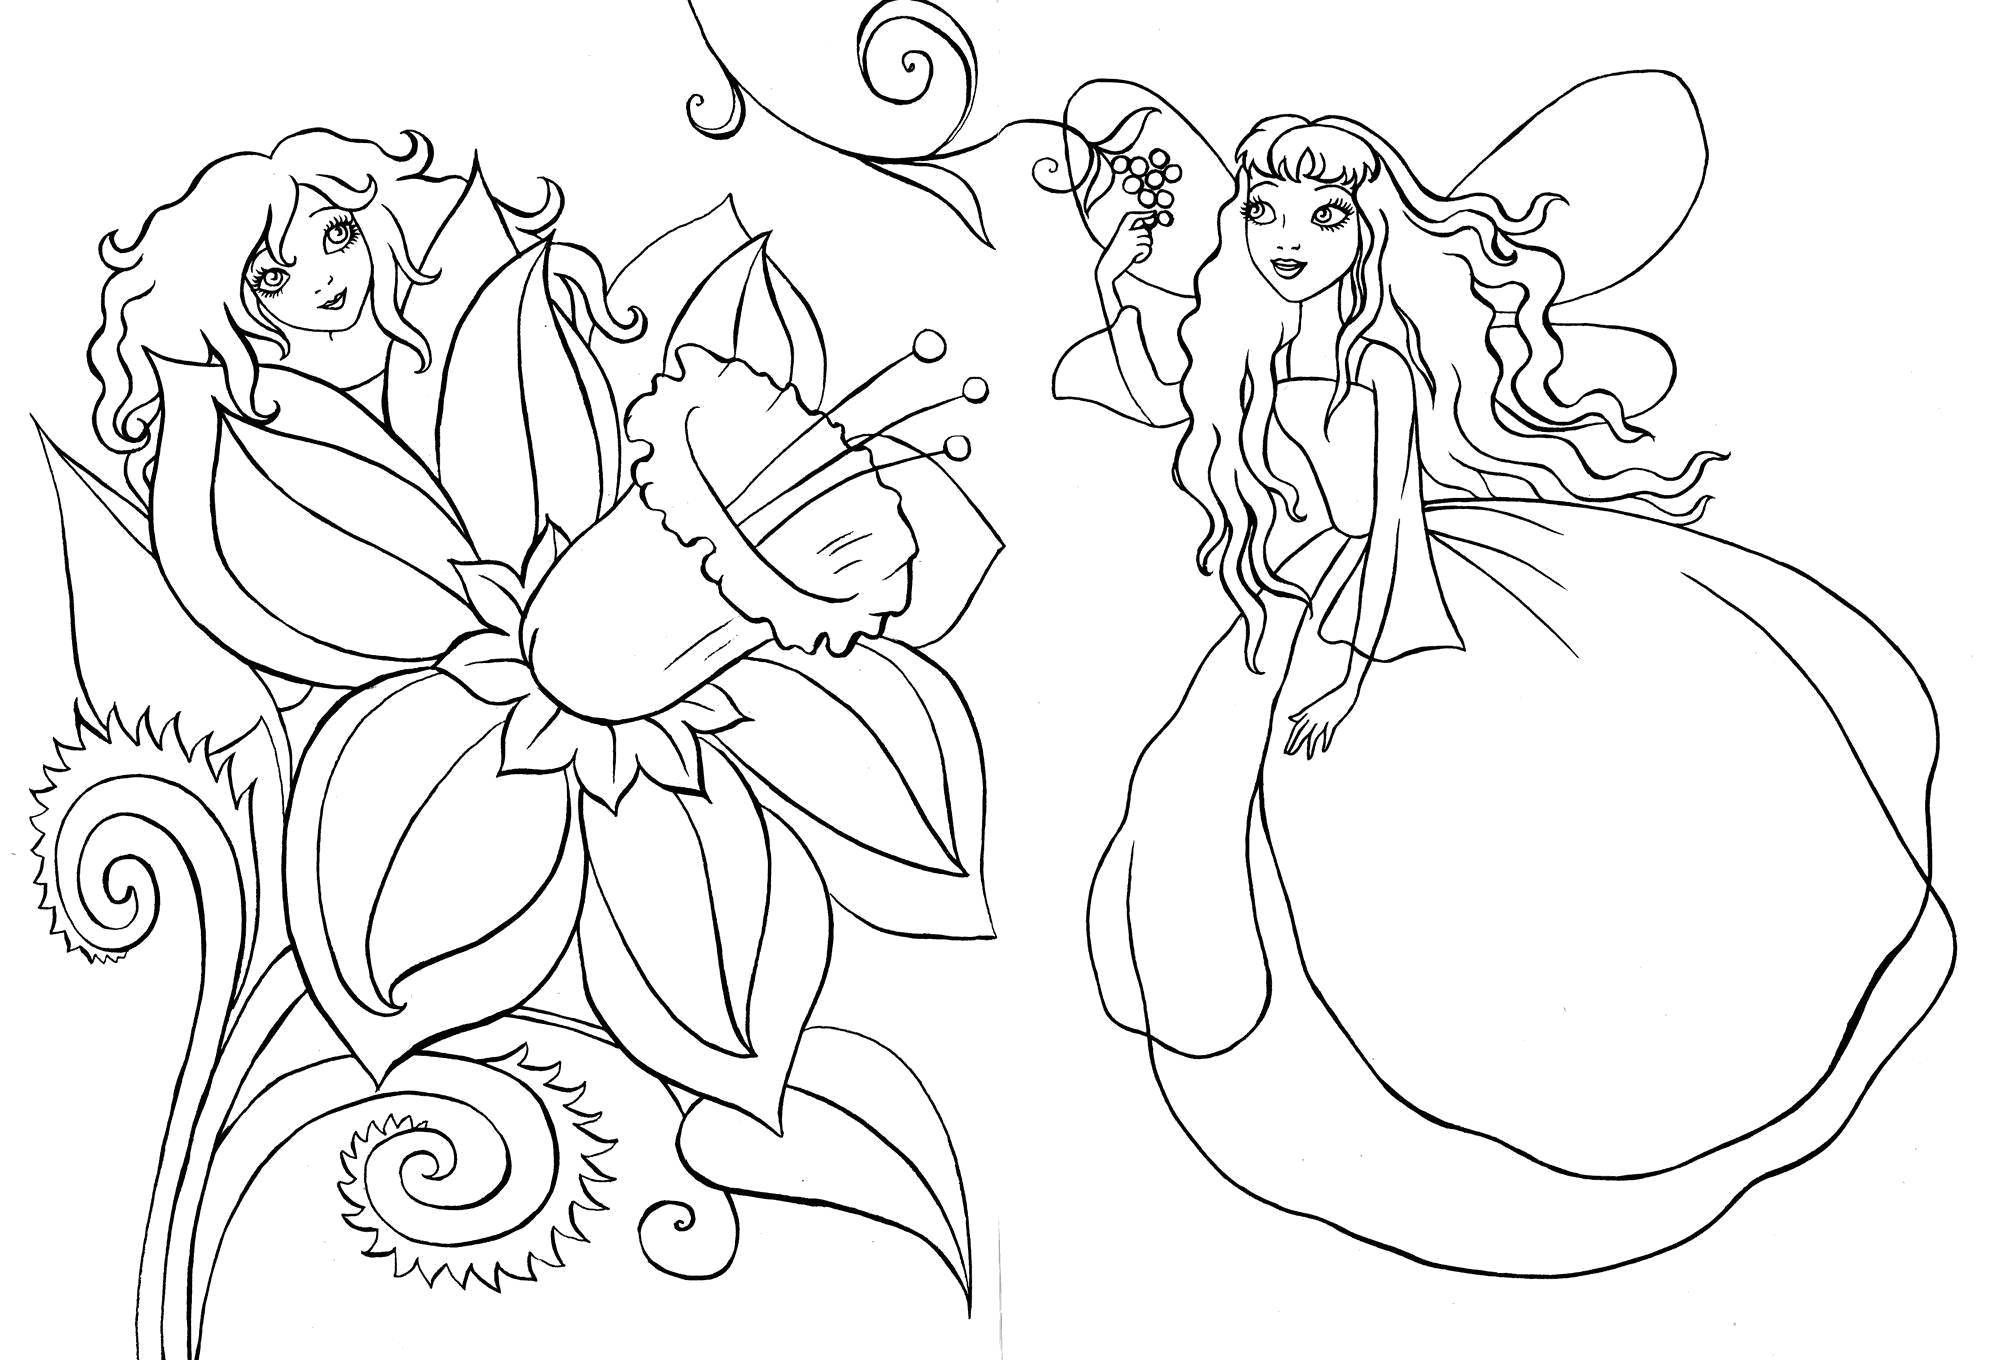 Coloring Flower fairies. Category fairies. Tags:  Fairy, forest, fairy tale.